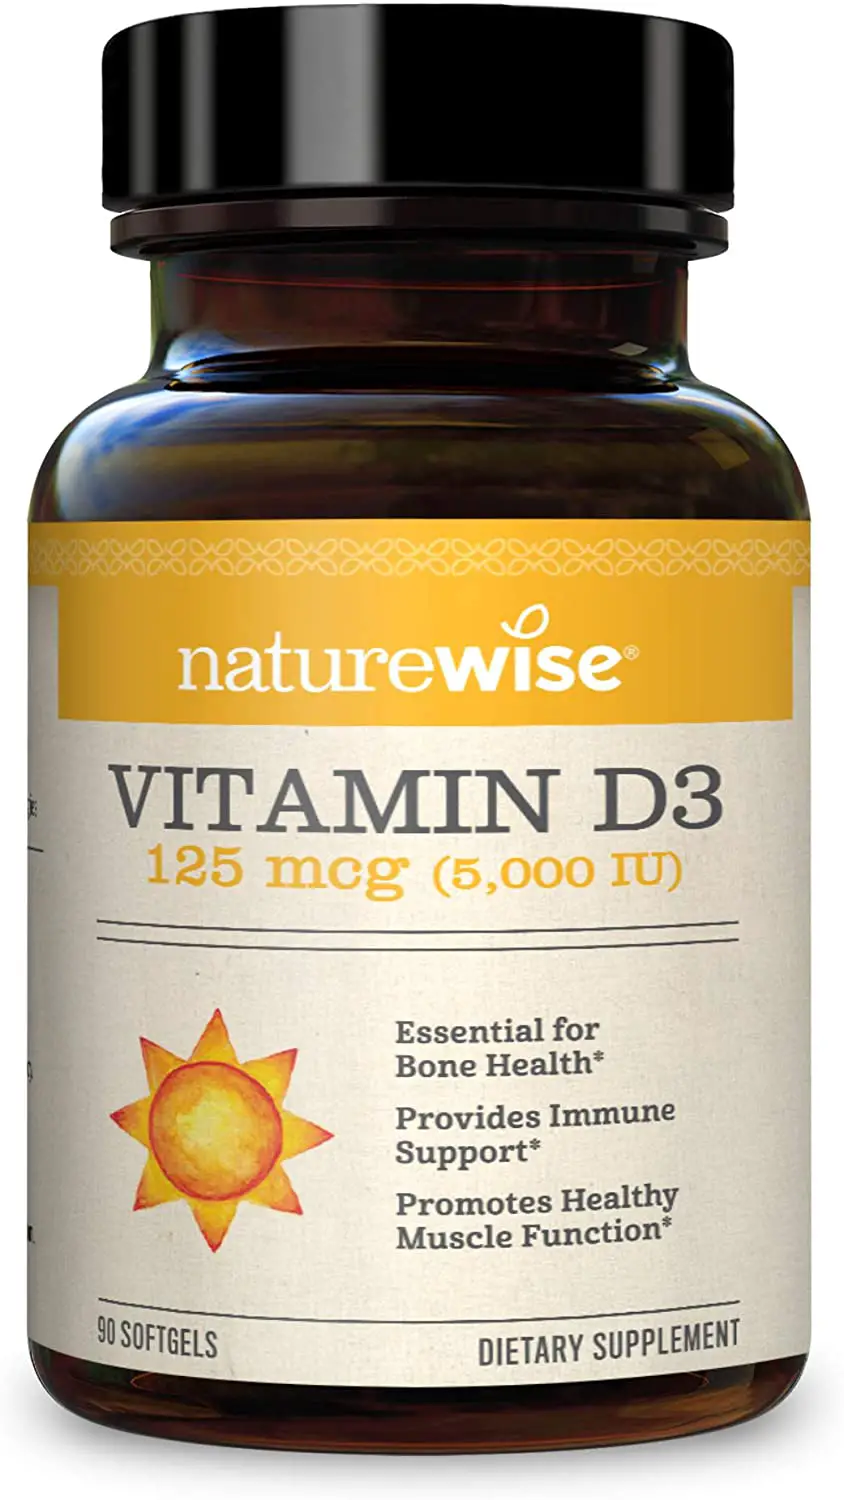 The best vitamin d supplement in 2021